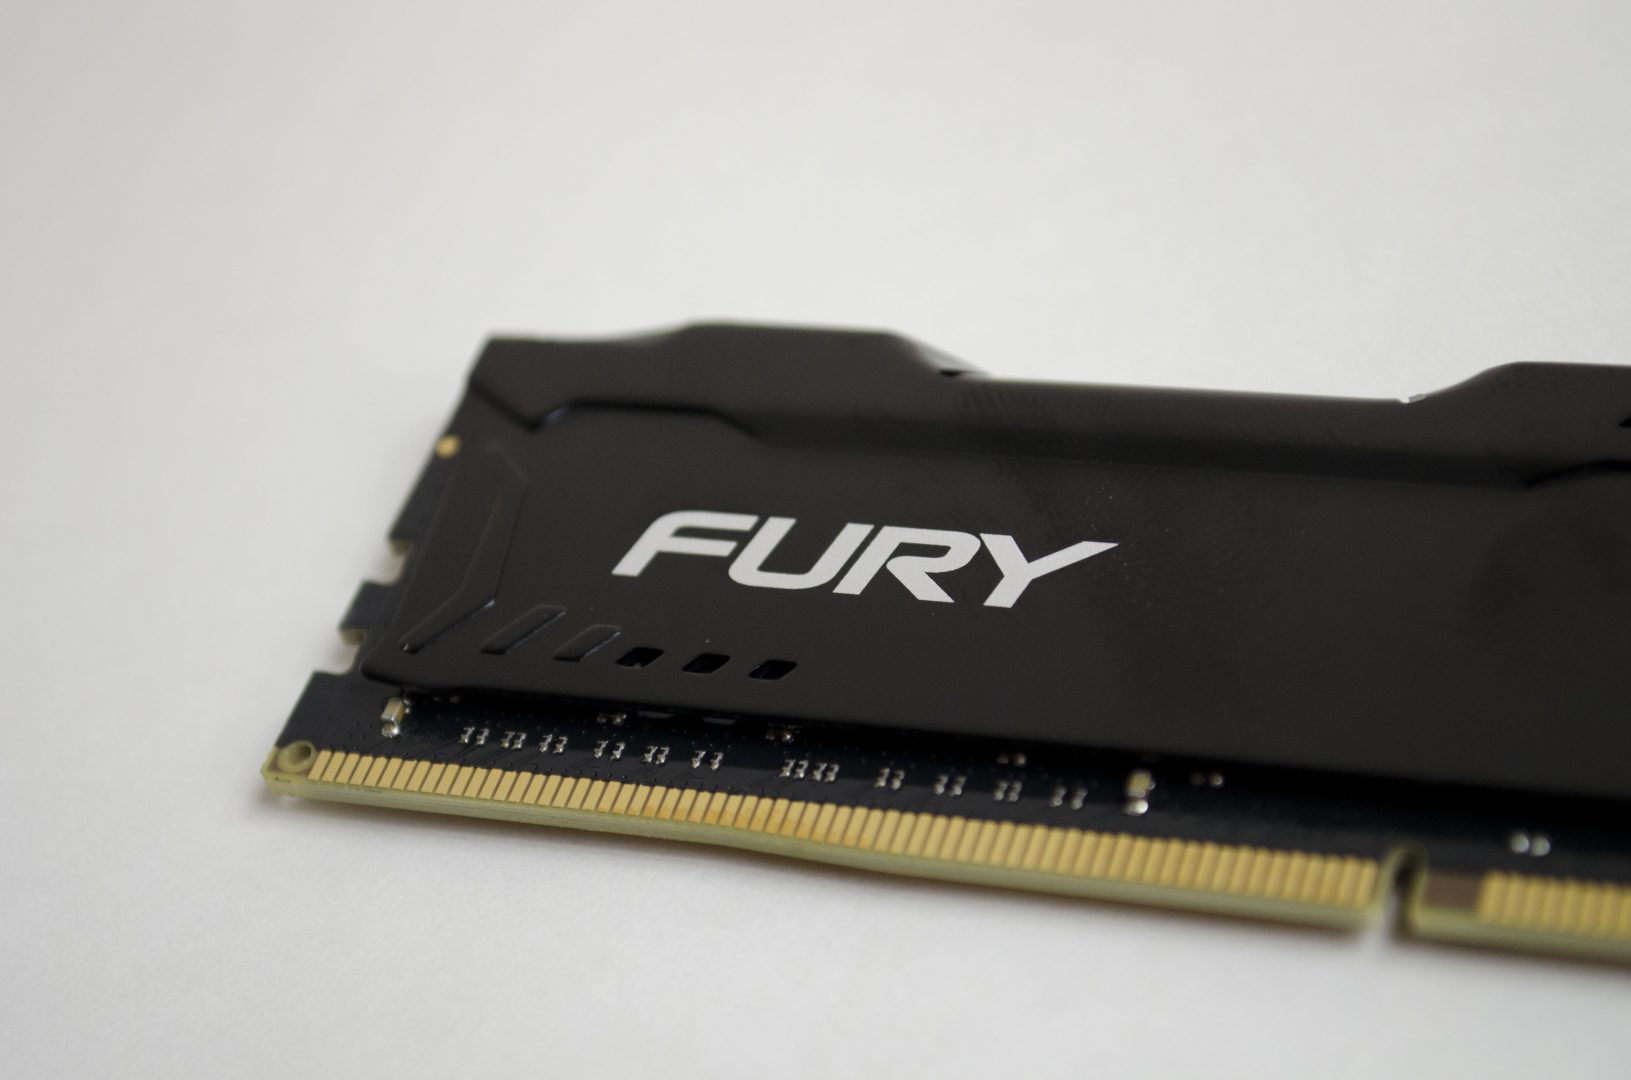 HyperX FURY DDR4 2666MHz Memory Review 